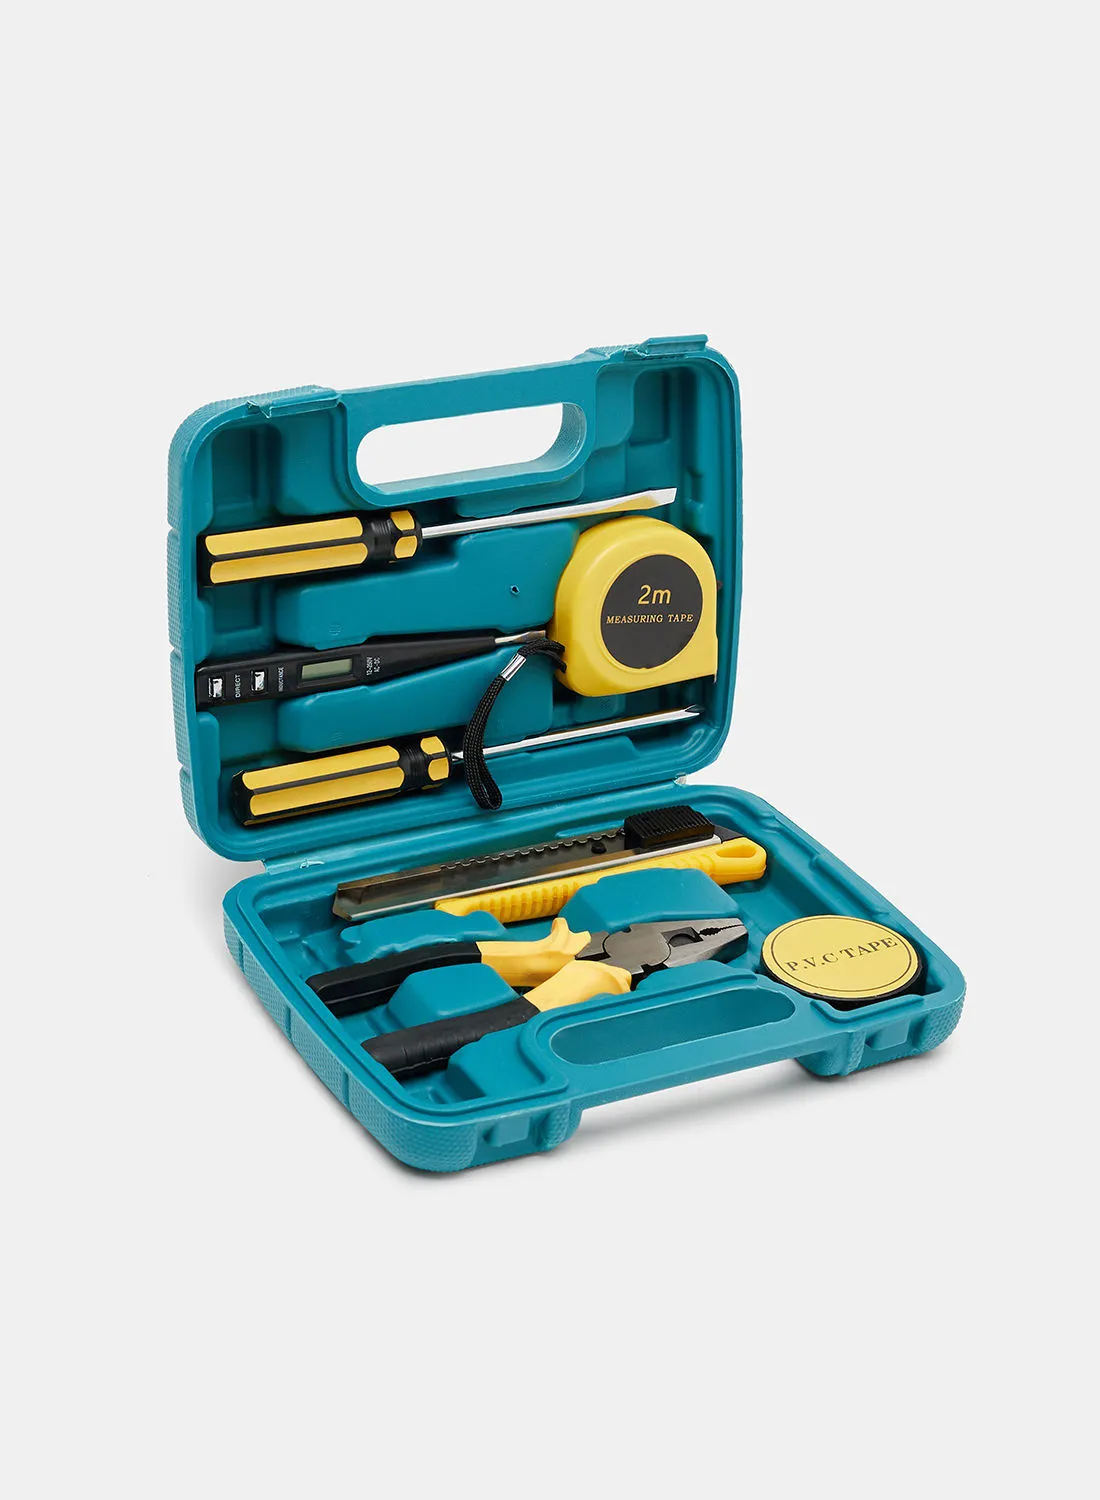 Amal 7-Piece Portable Household Repair Hand Tool Kit Household Screw Driver Plier Screwdriver Pliers Tools Set Box